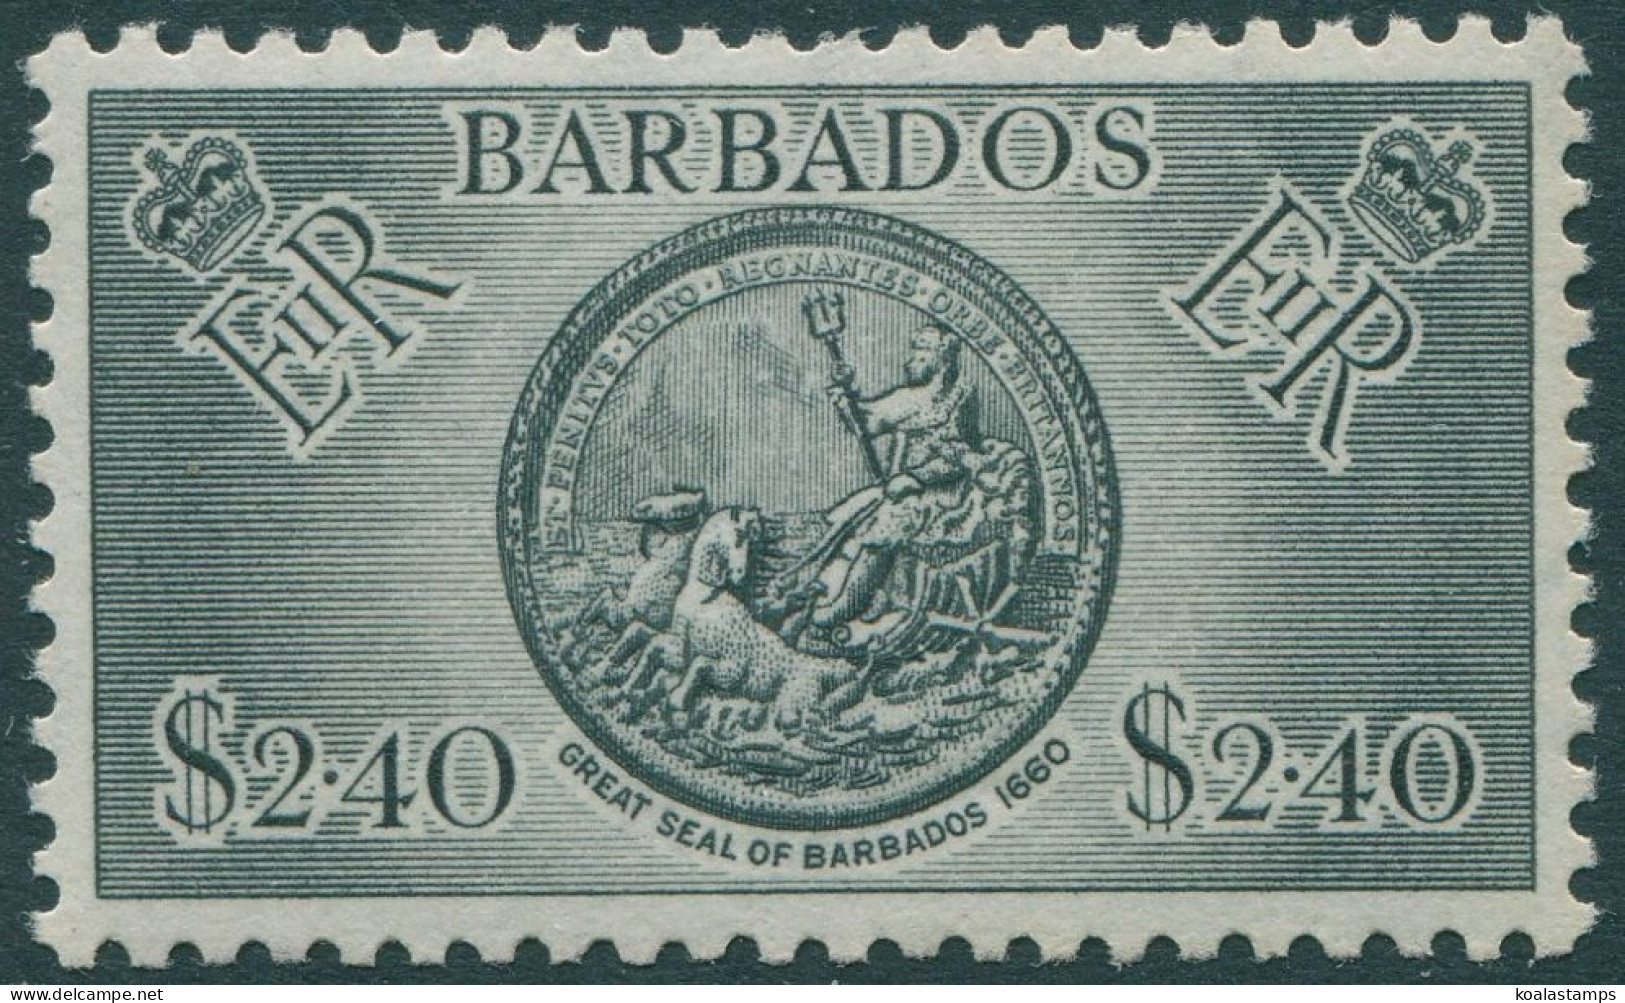 Barbados 1950 SG282 $2.40 Black Great Seal MNH - Barbades (1966-...)